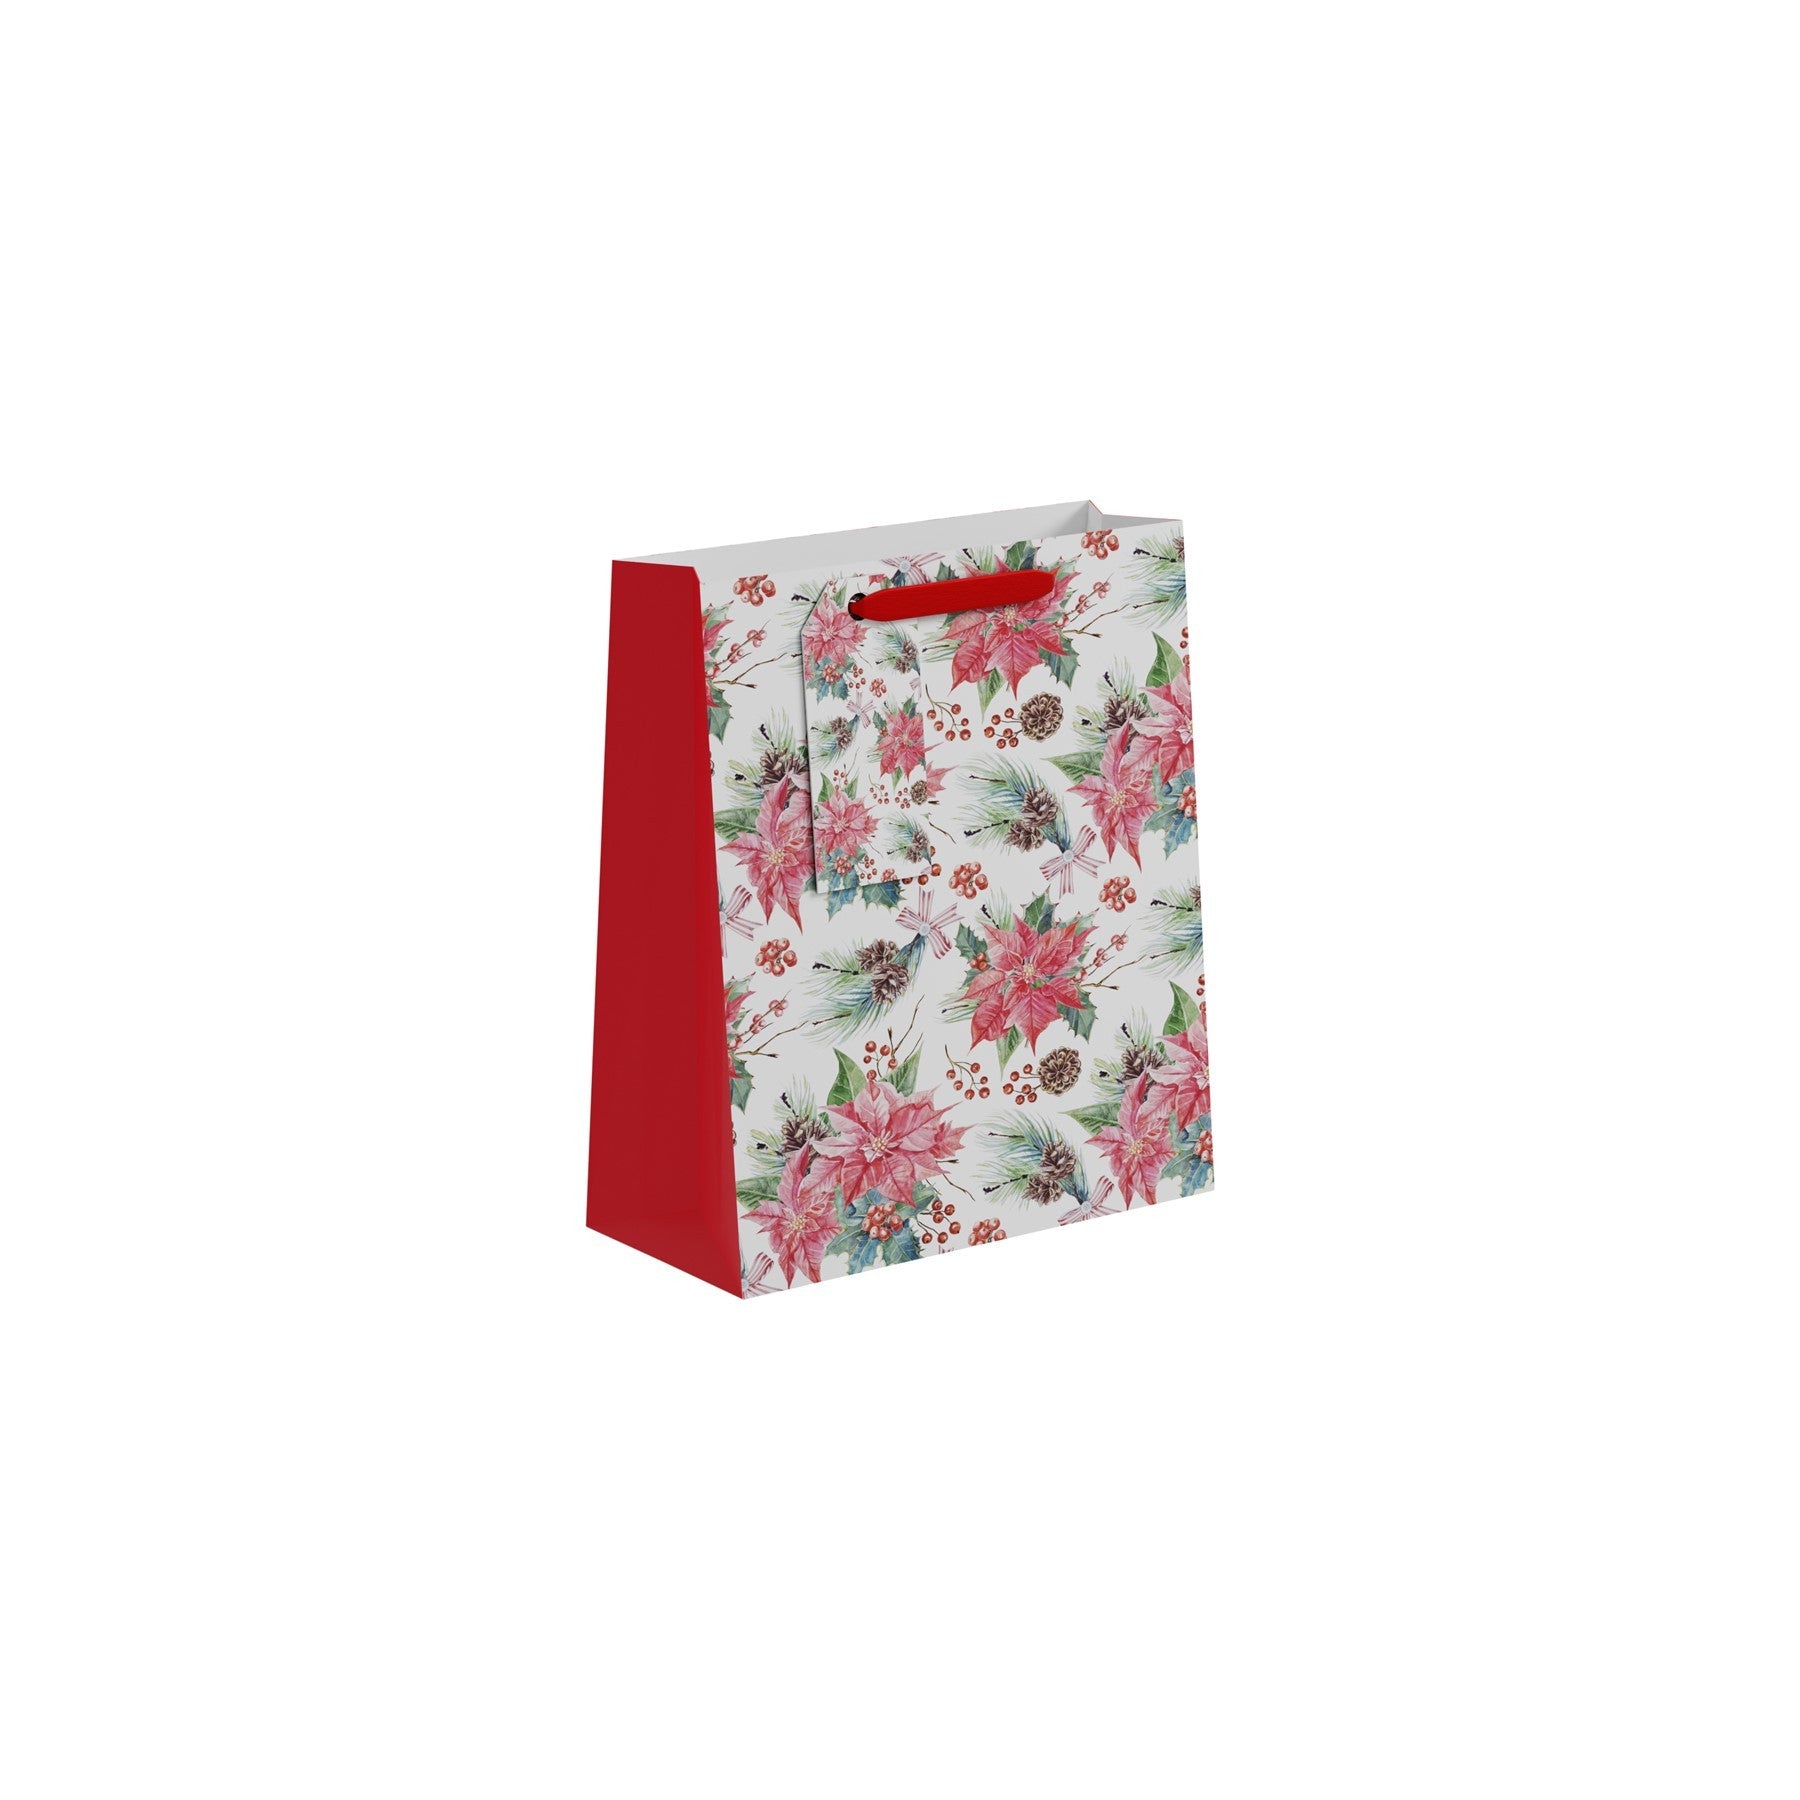 View Christmas Poinsettia Gift Bag Medium information